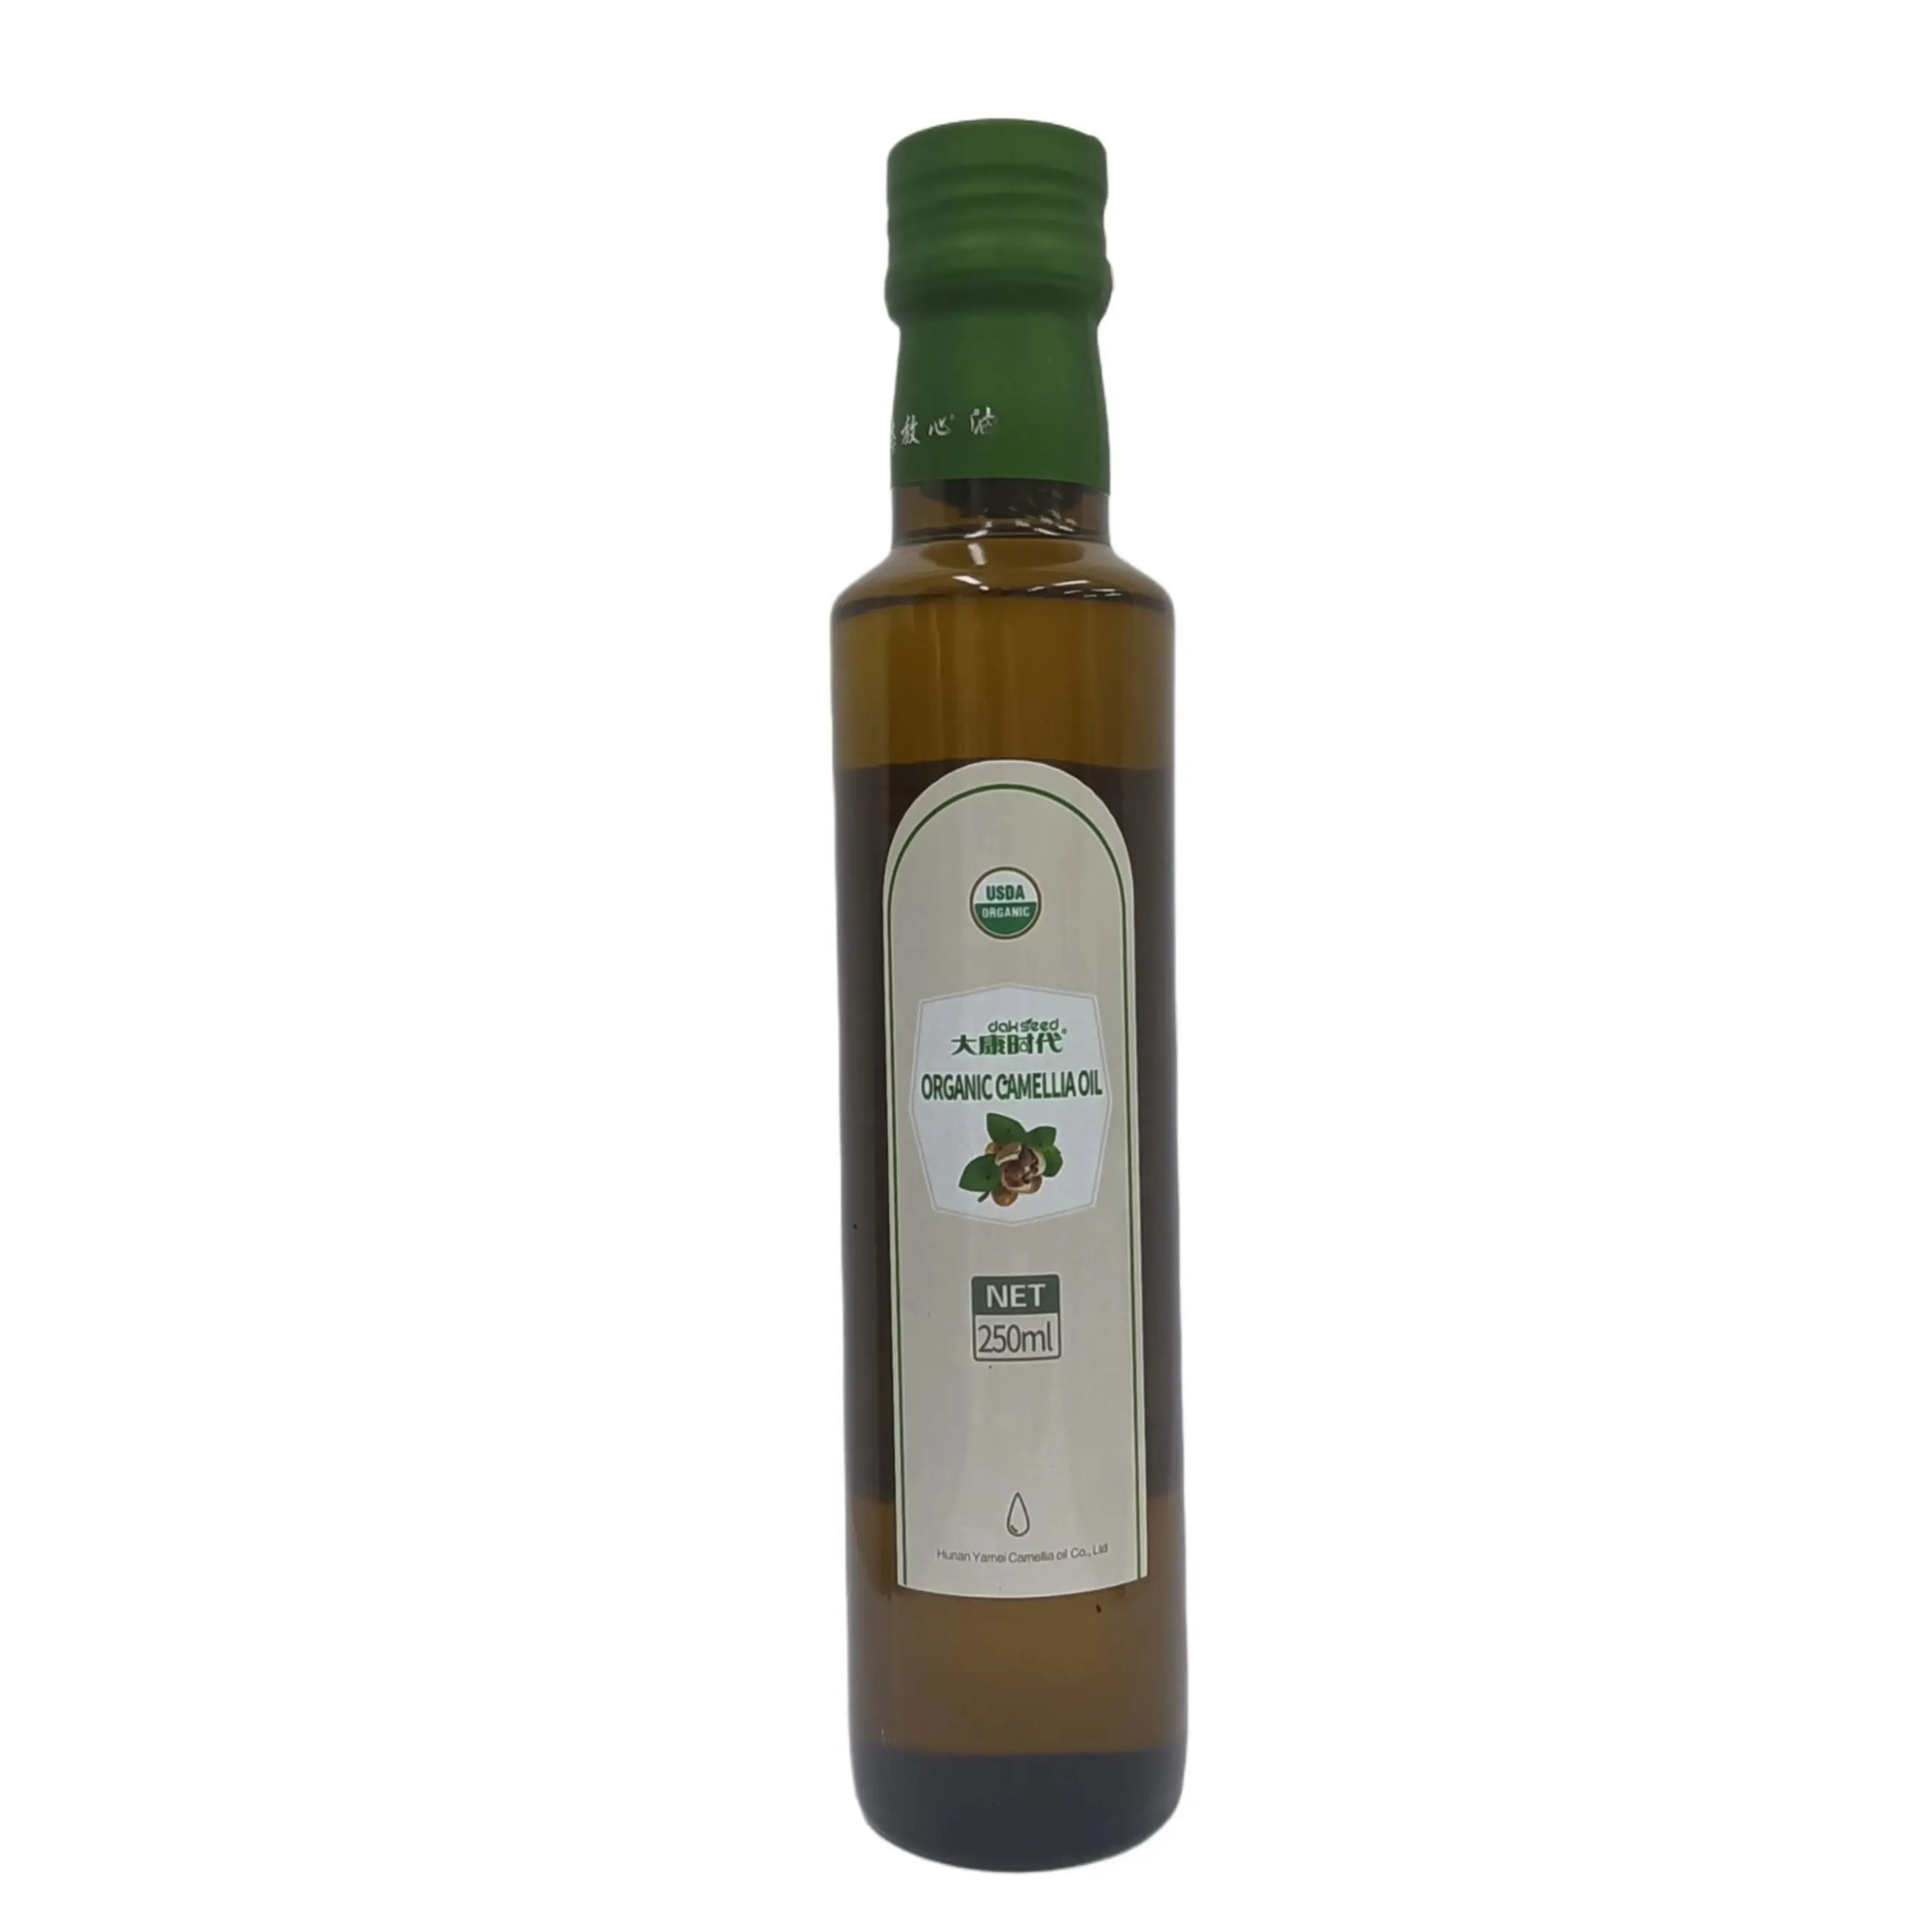 USDA Organic certified pure cold pressed camellia oil 250ml